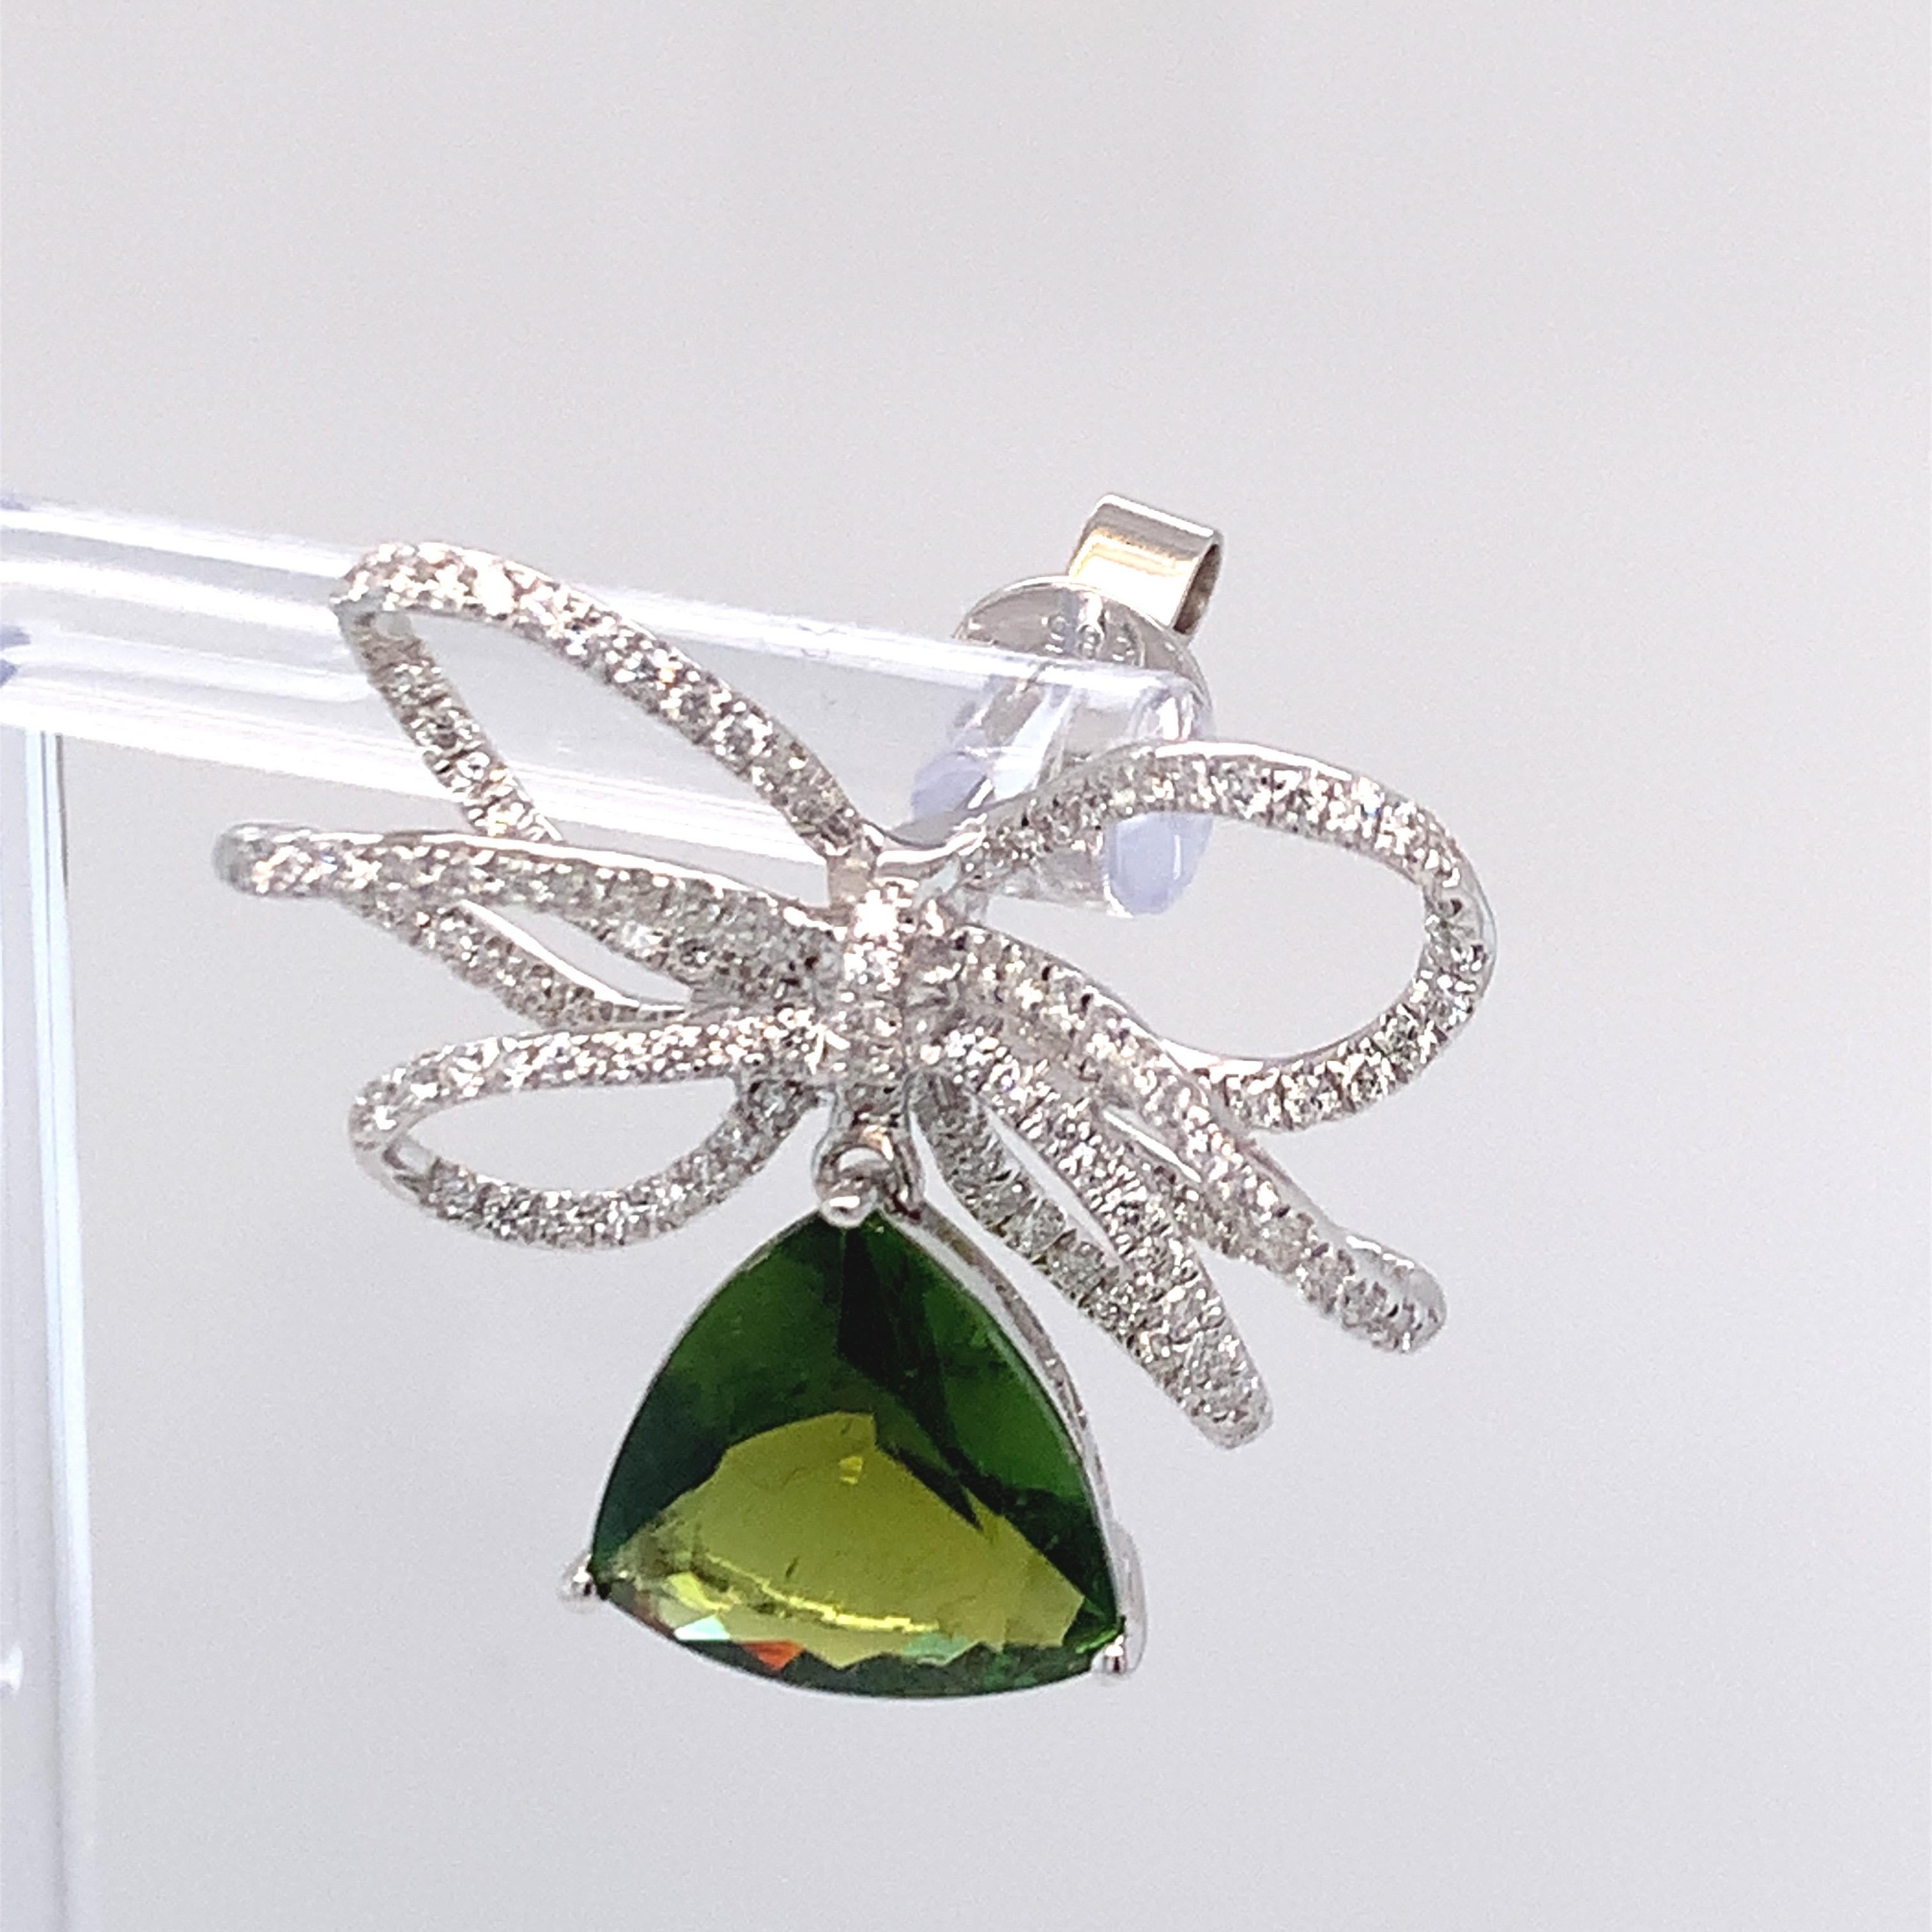 6.93 Carat Green Tourmaline Diamond Dangle Earrings in 14K White Gold 2